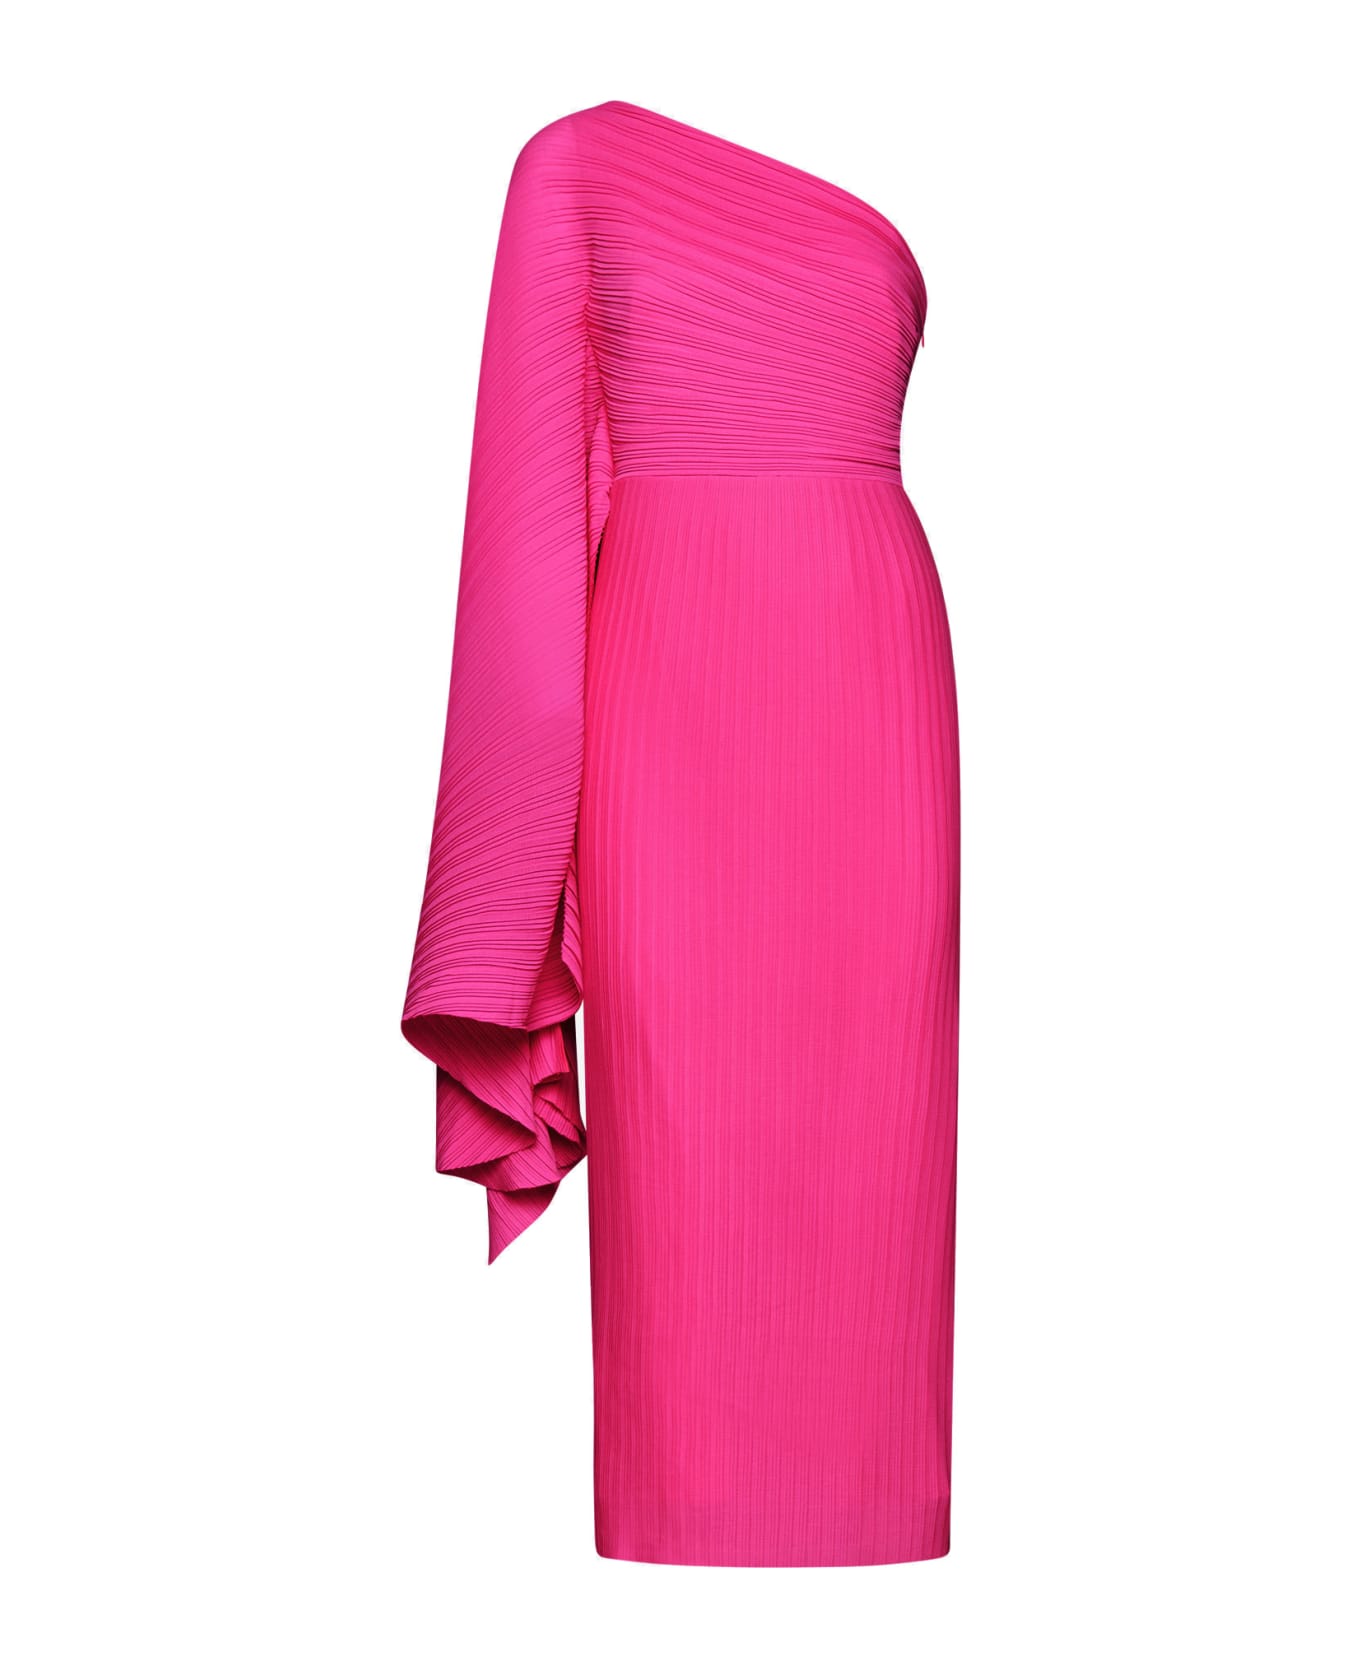 Solace London Dress - Hot pink